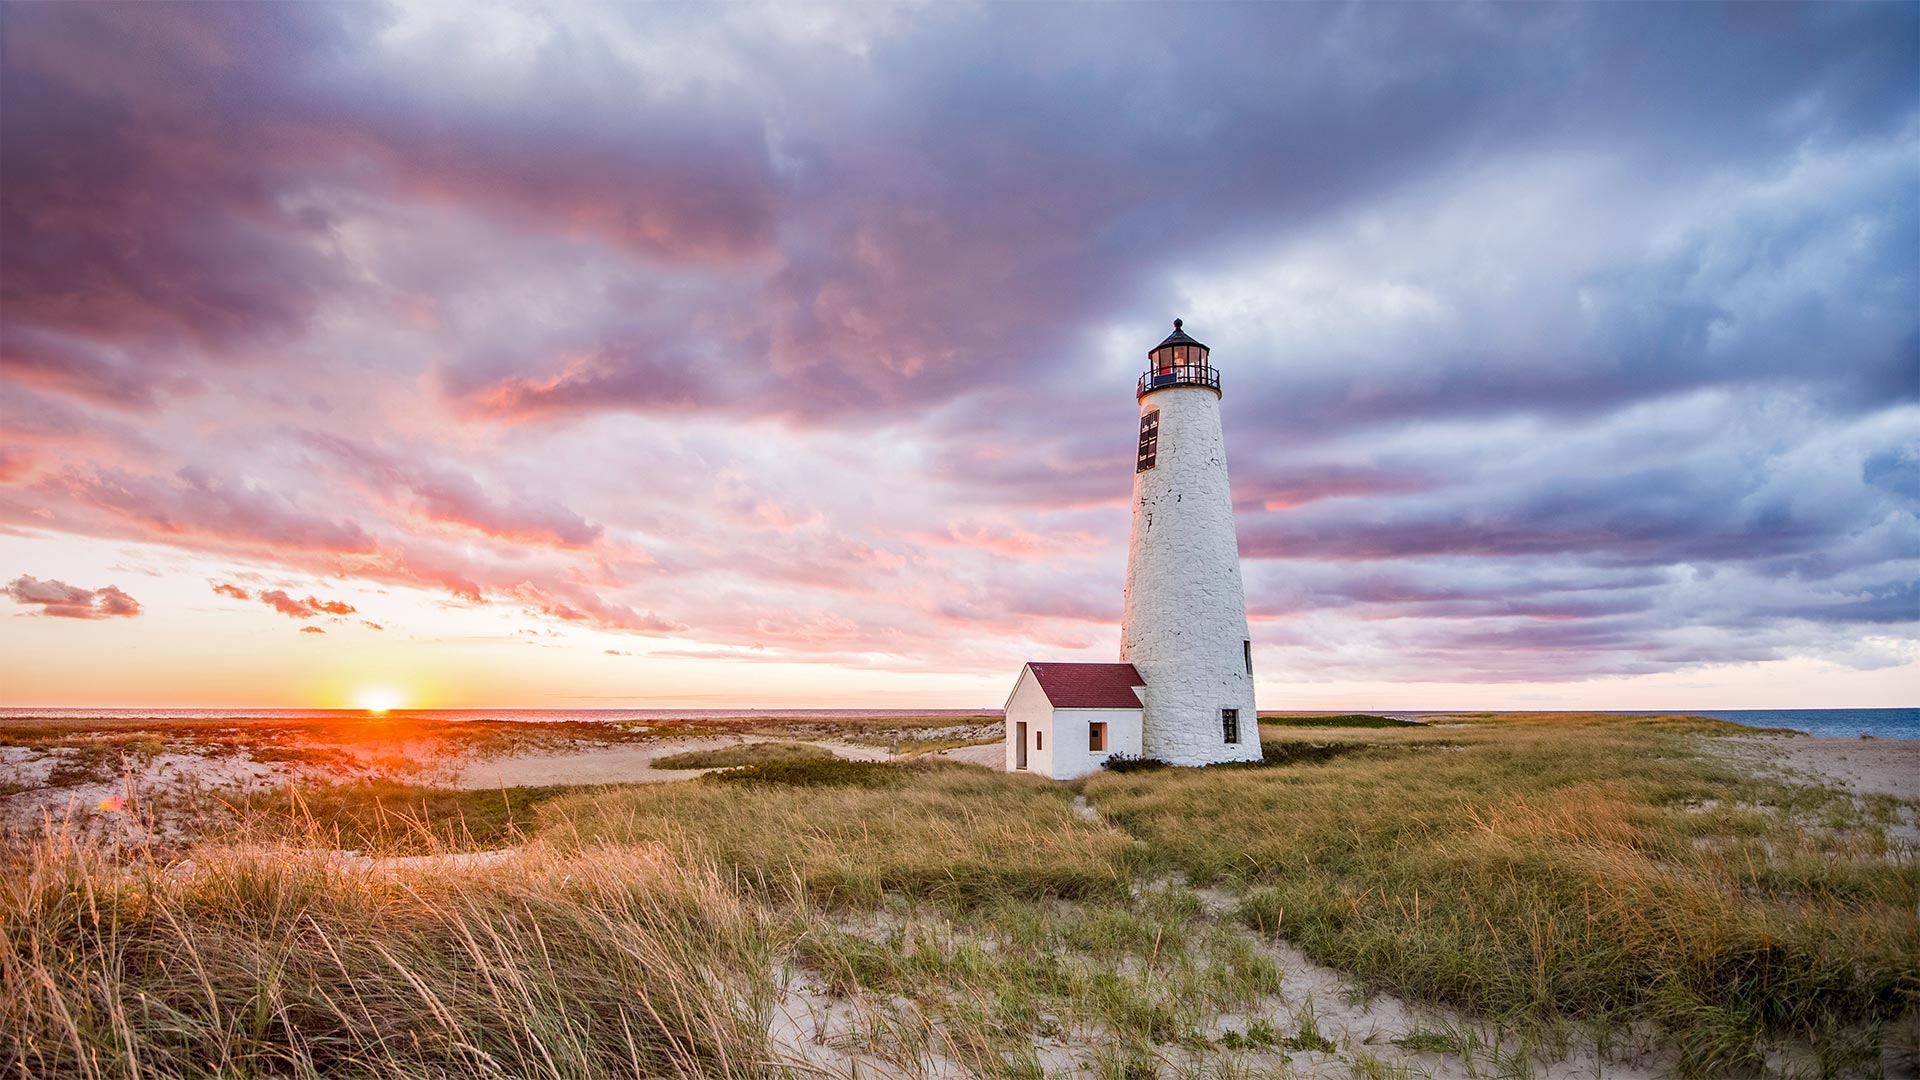 Great Point Light on Nantucket Island, Massachusetts - Cate Brown/Cavan Images)